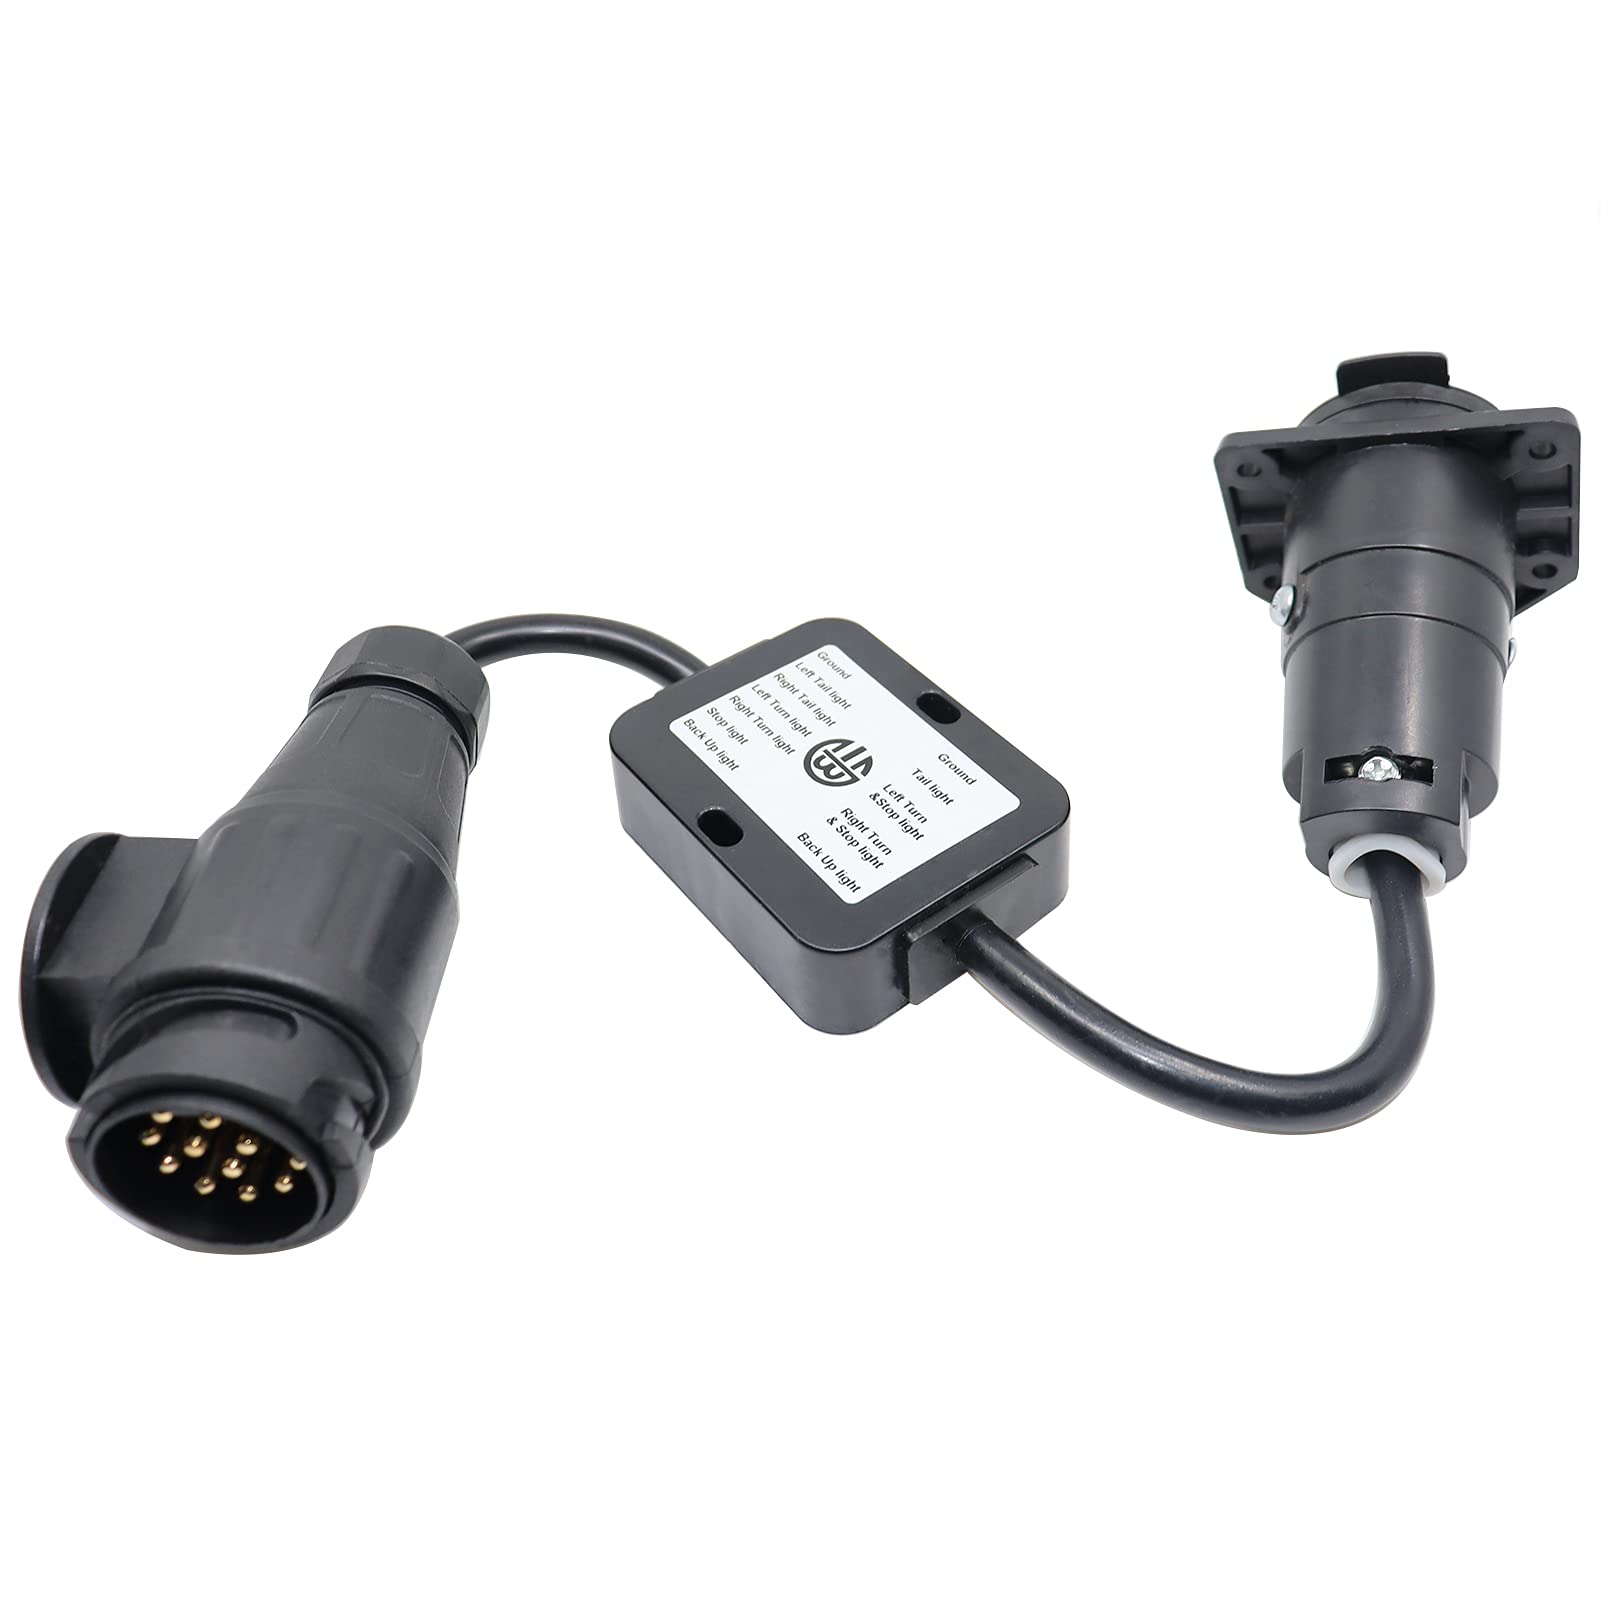 CARROFIX Trailer Light Converter European Round 13-Pin Plug to U.S 7-Way Blade Adapter Connector von CARROFIX